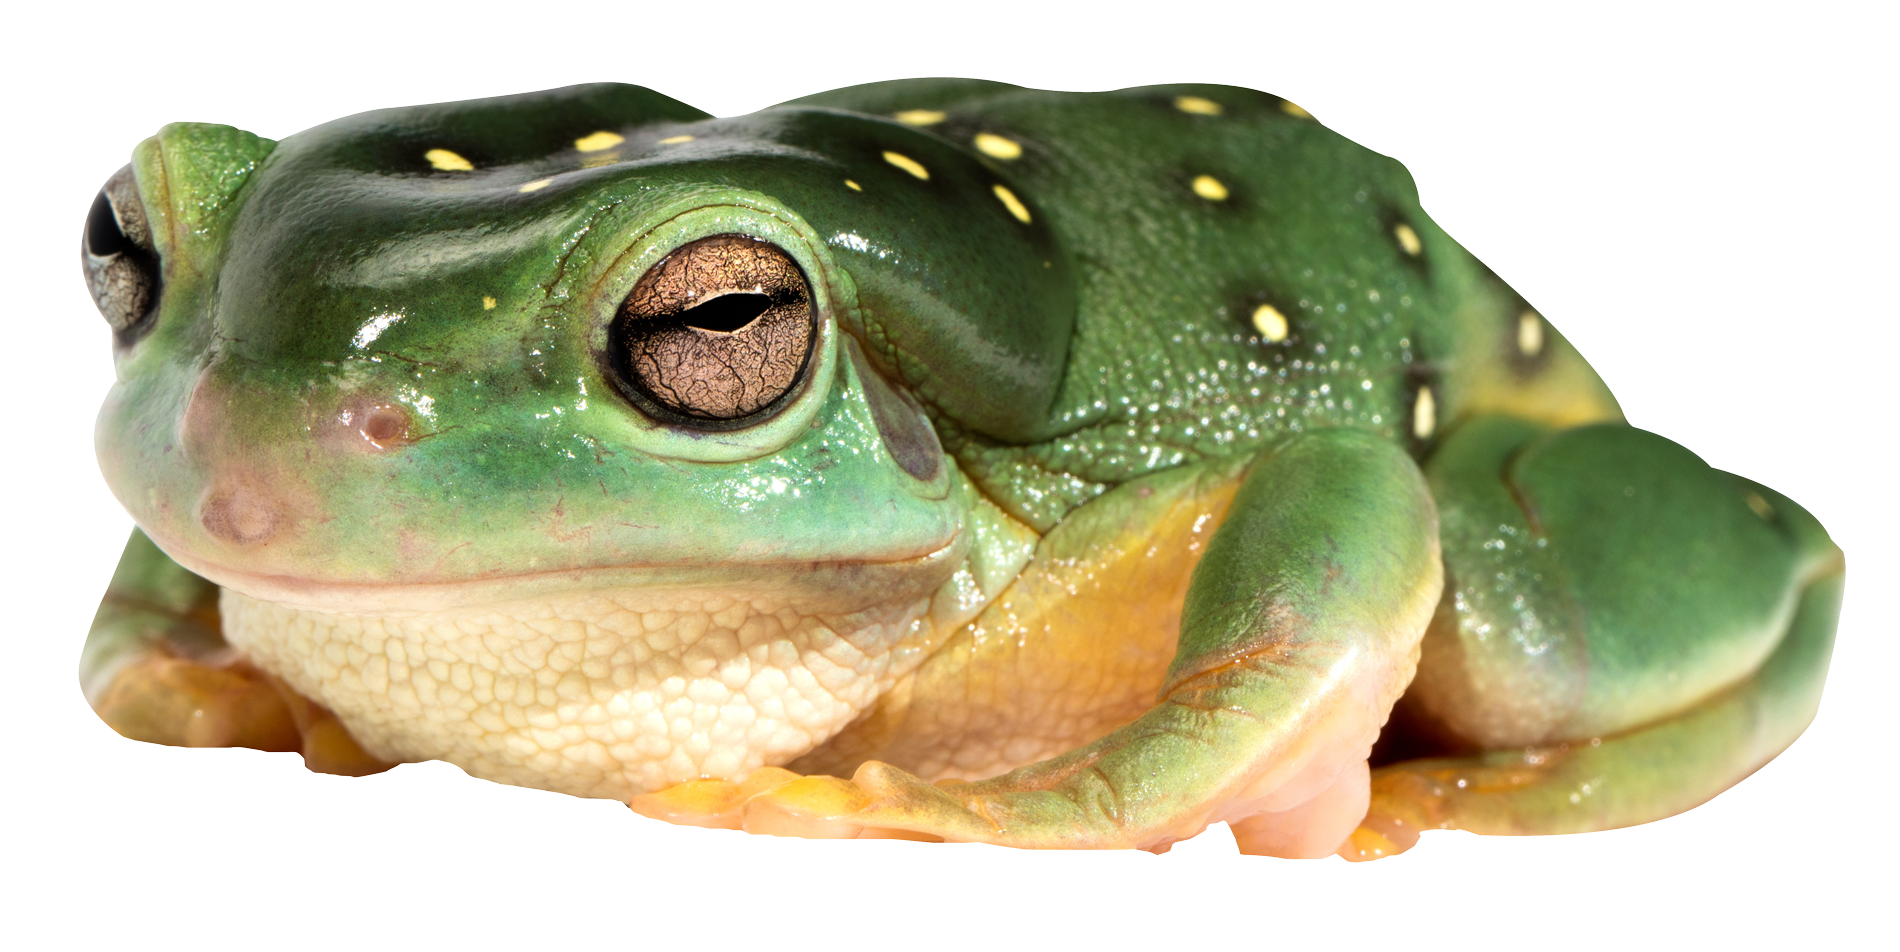 Amphibian Frog Free Download Image PNG Image